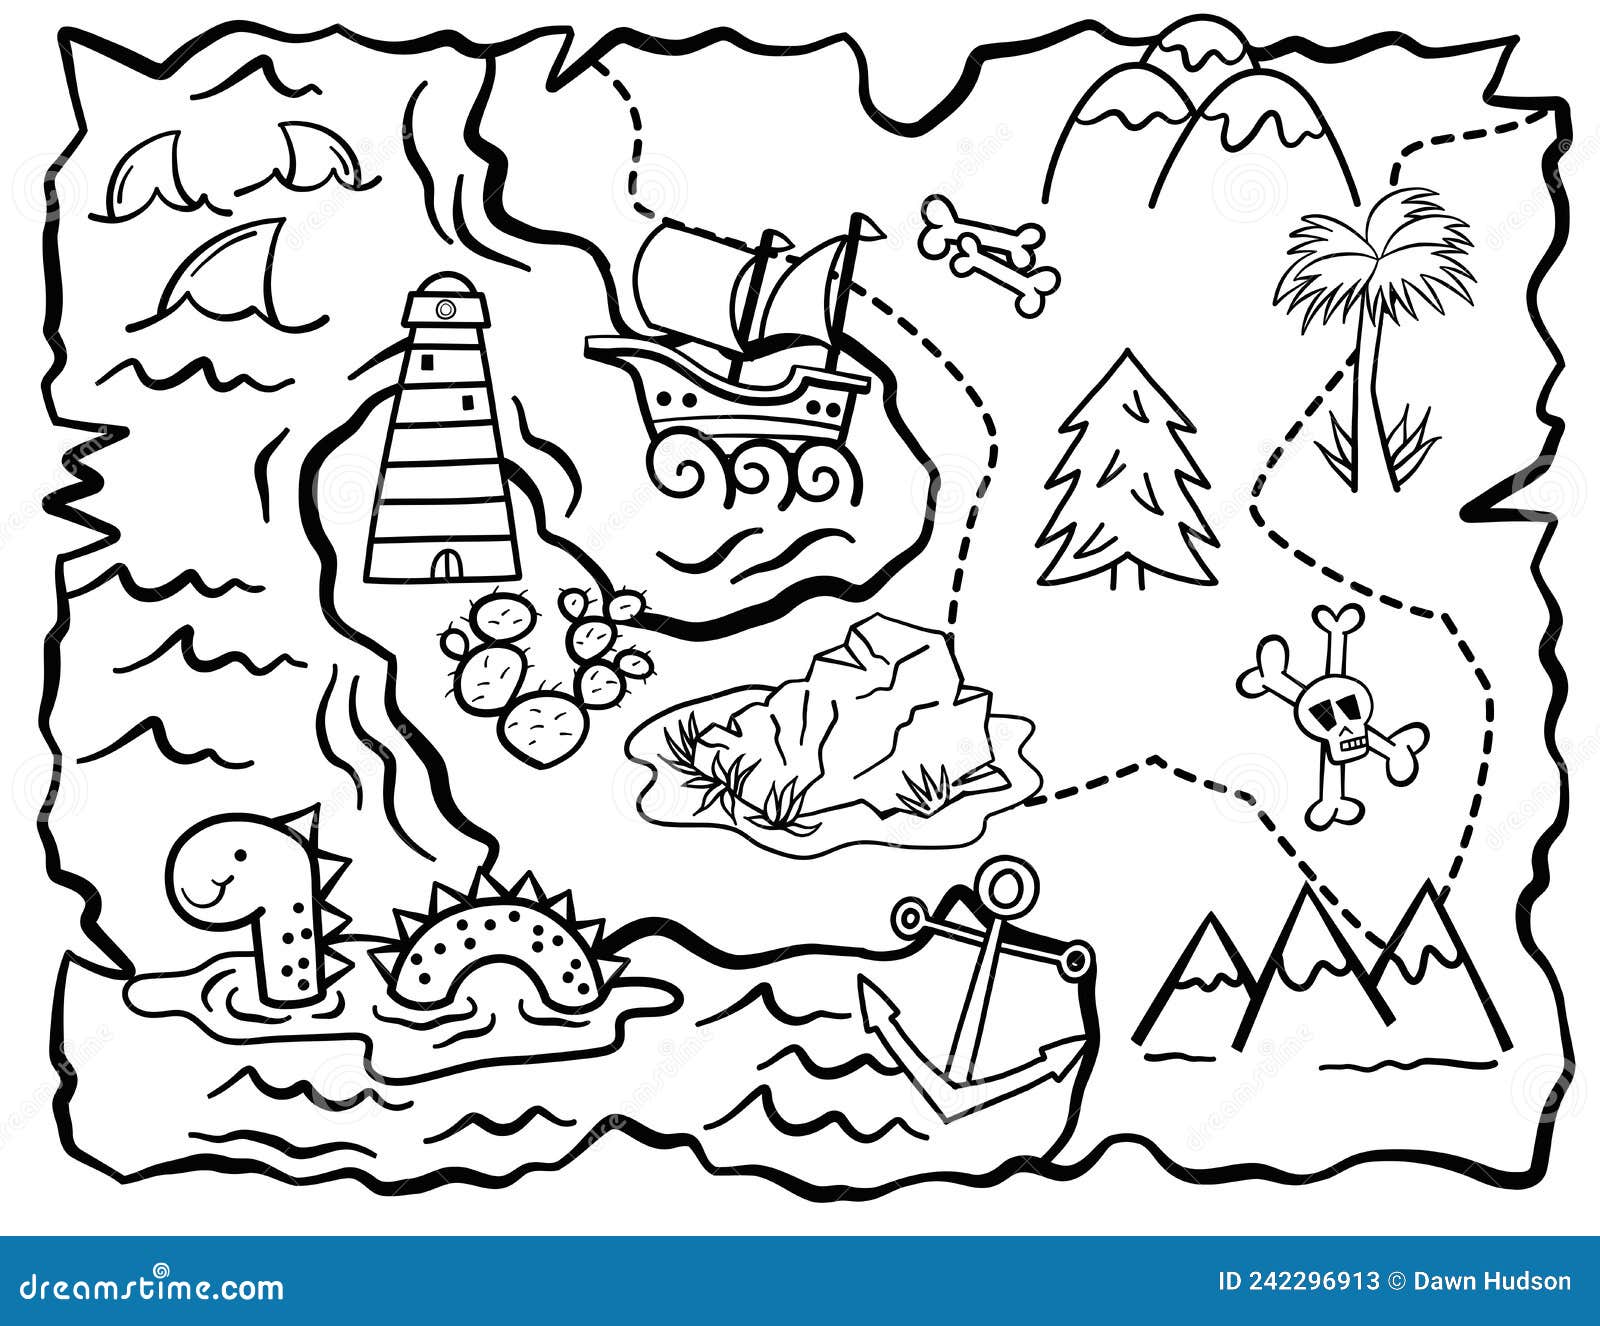 Treasure map kids adventure coloring page stock vector